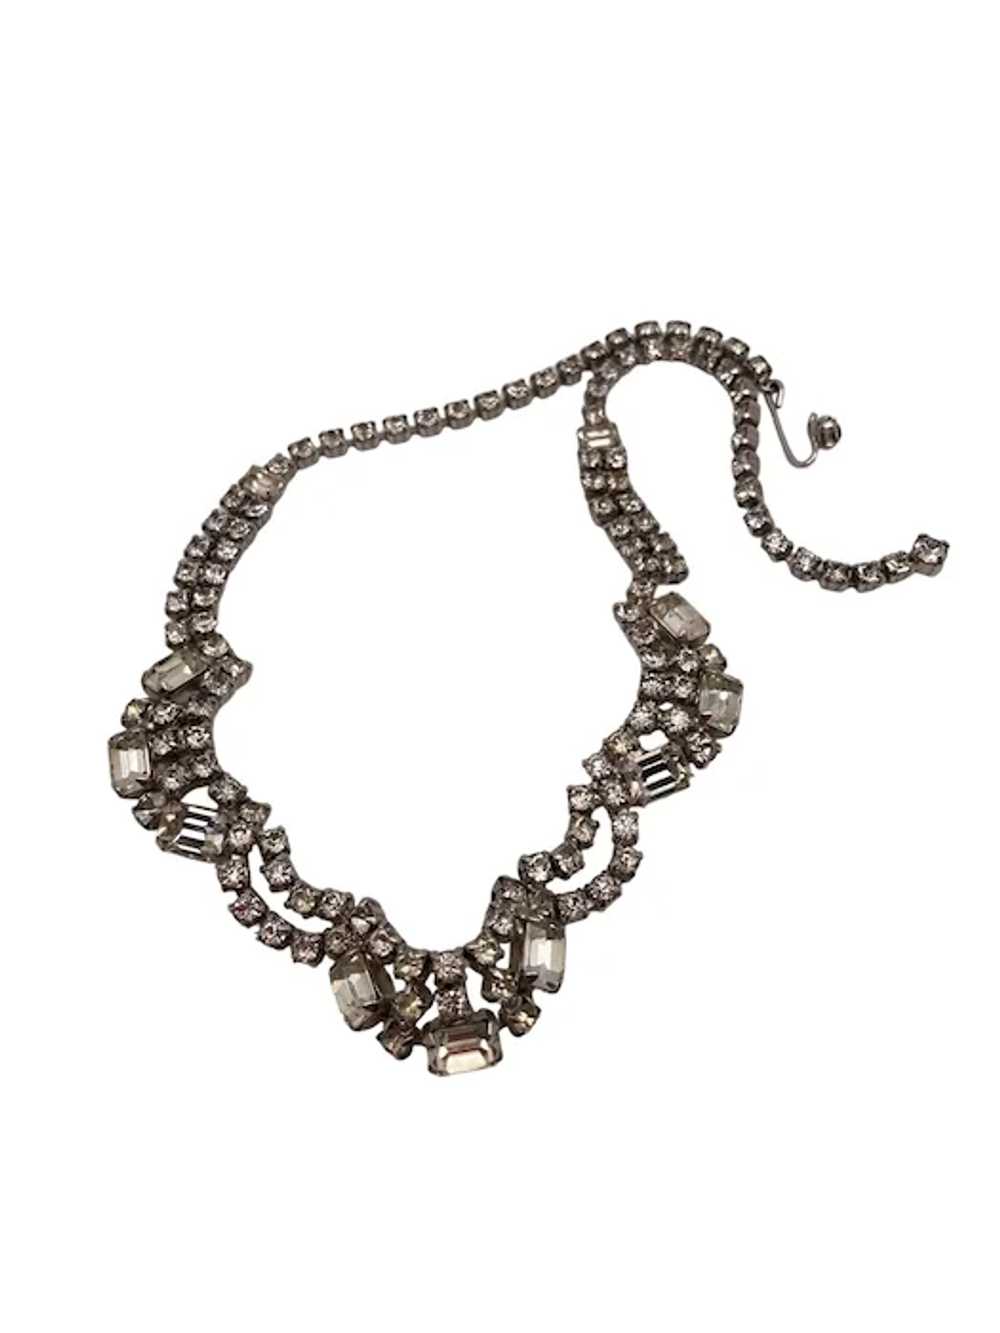 Vintage Mid-Century Rhinestone Choker Necklace - image 8